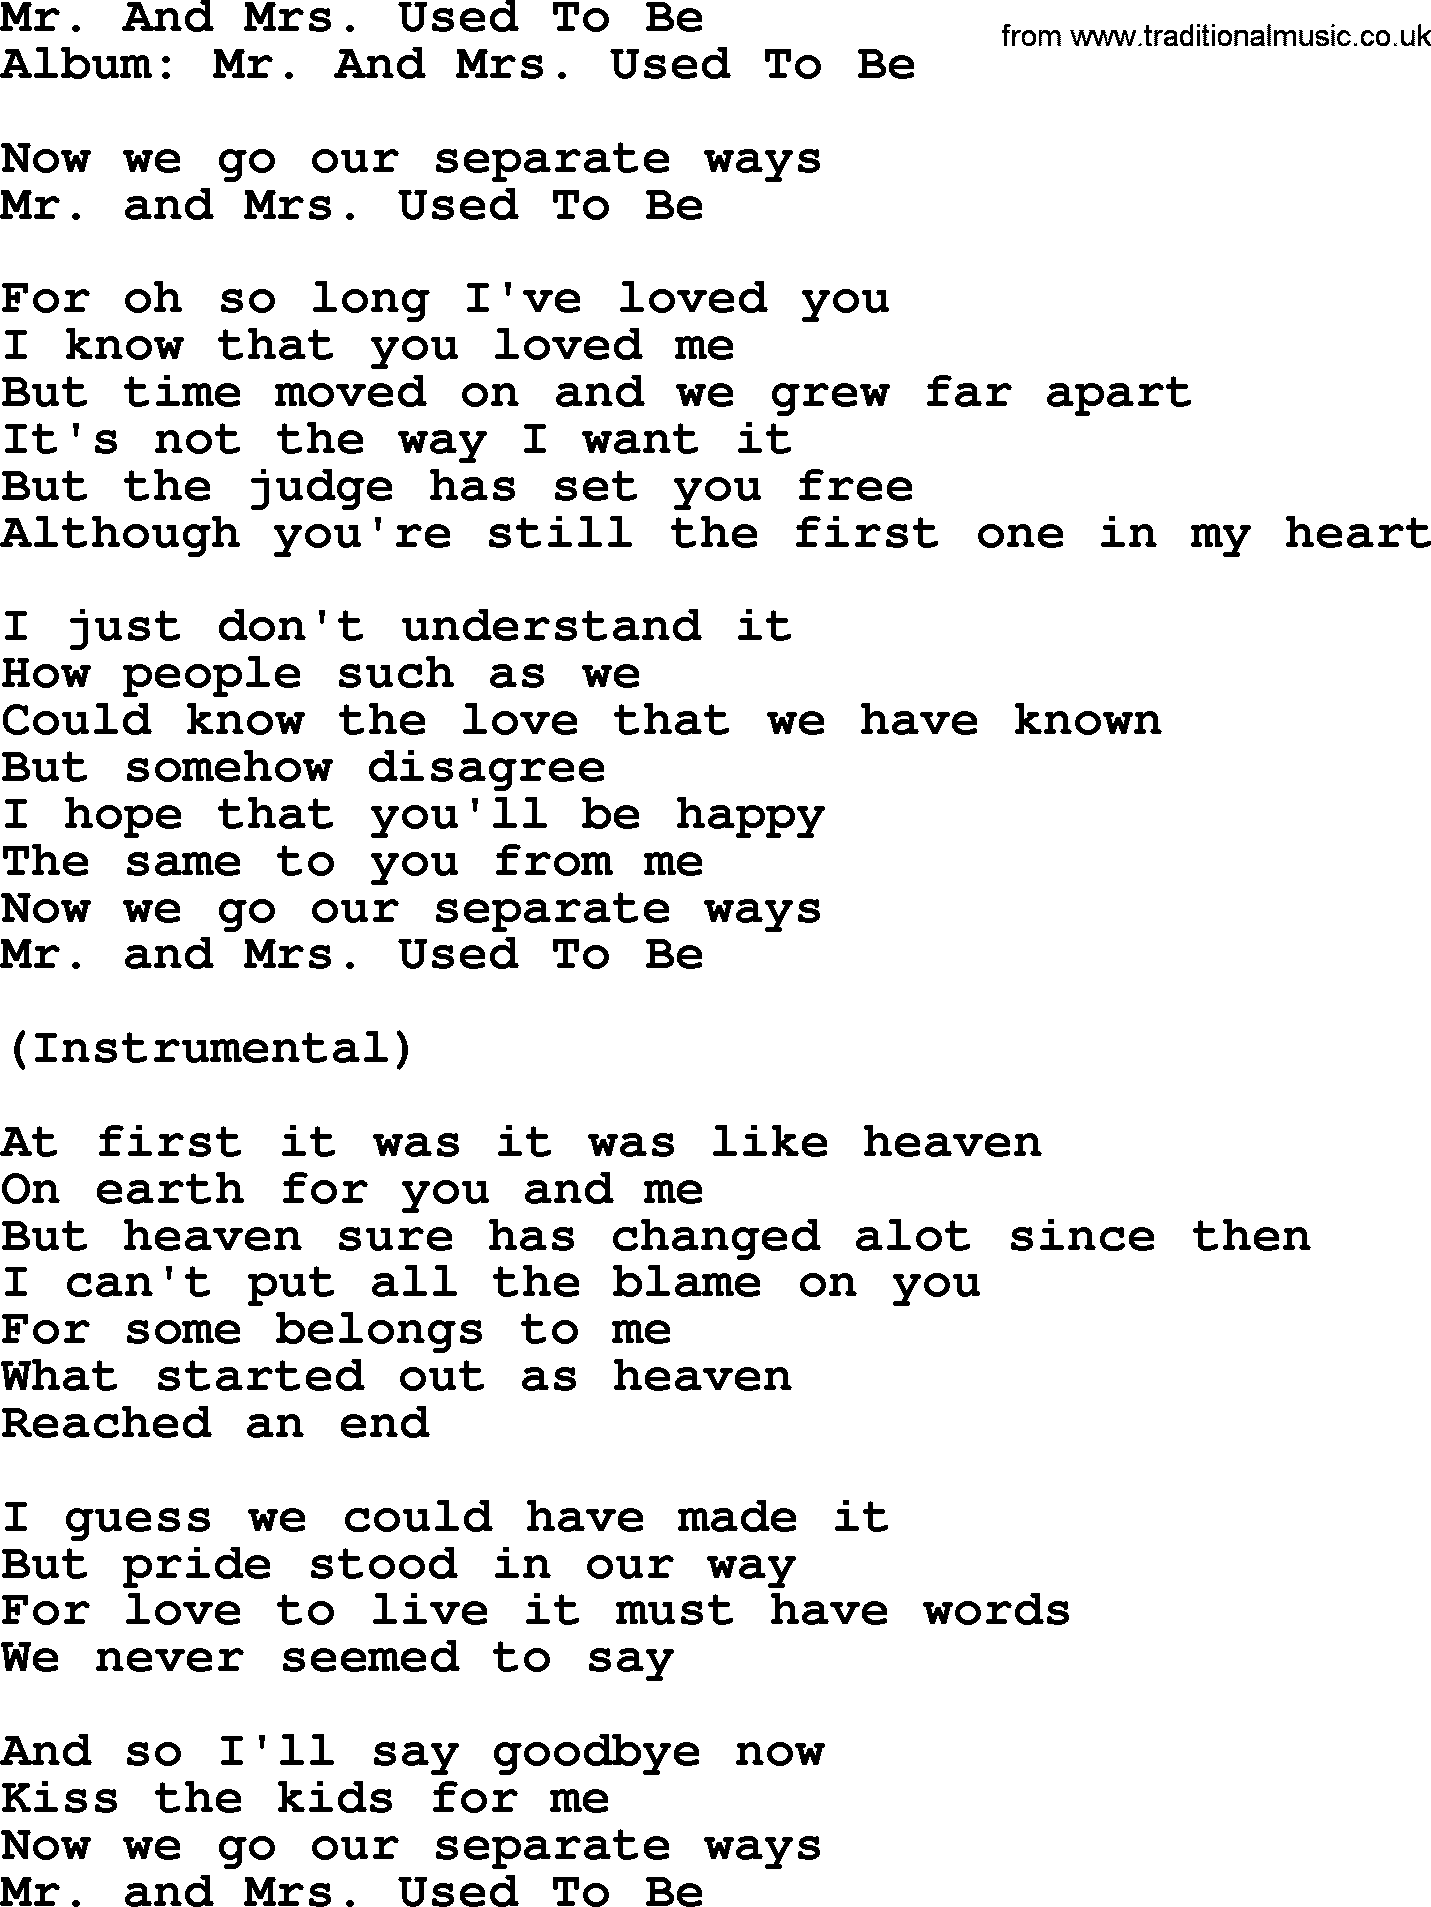 Loretta Lynn song: Mr. And Mrs. Used To Be lyrics